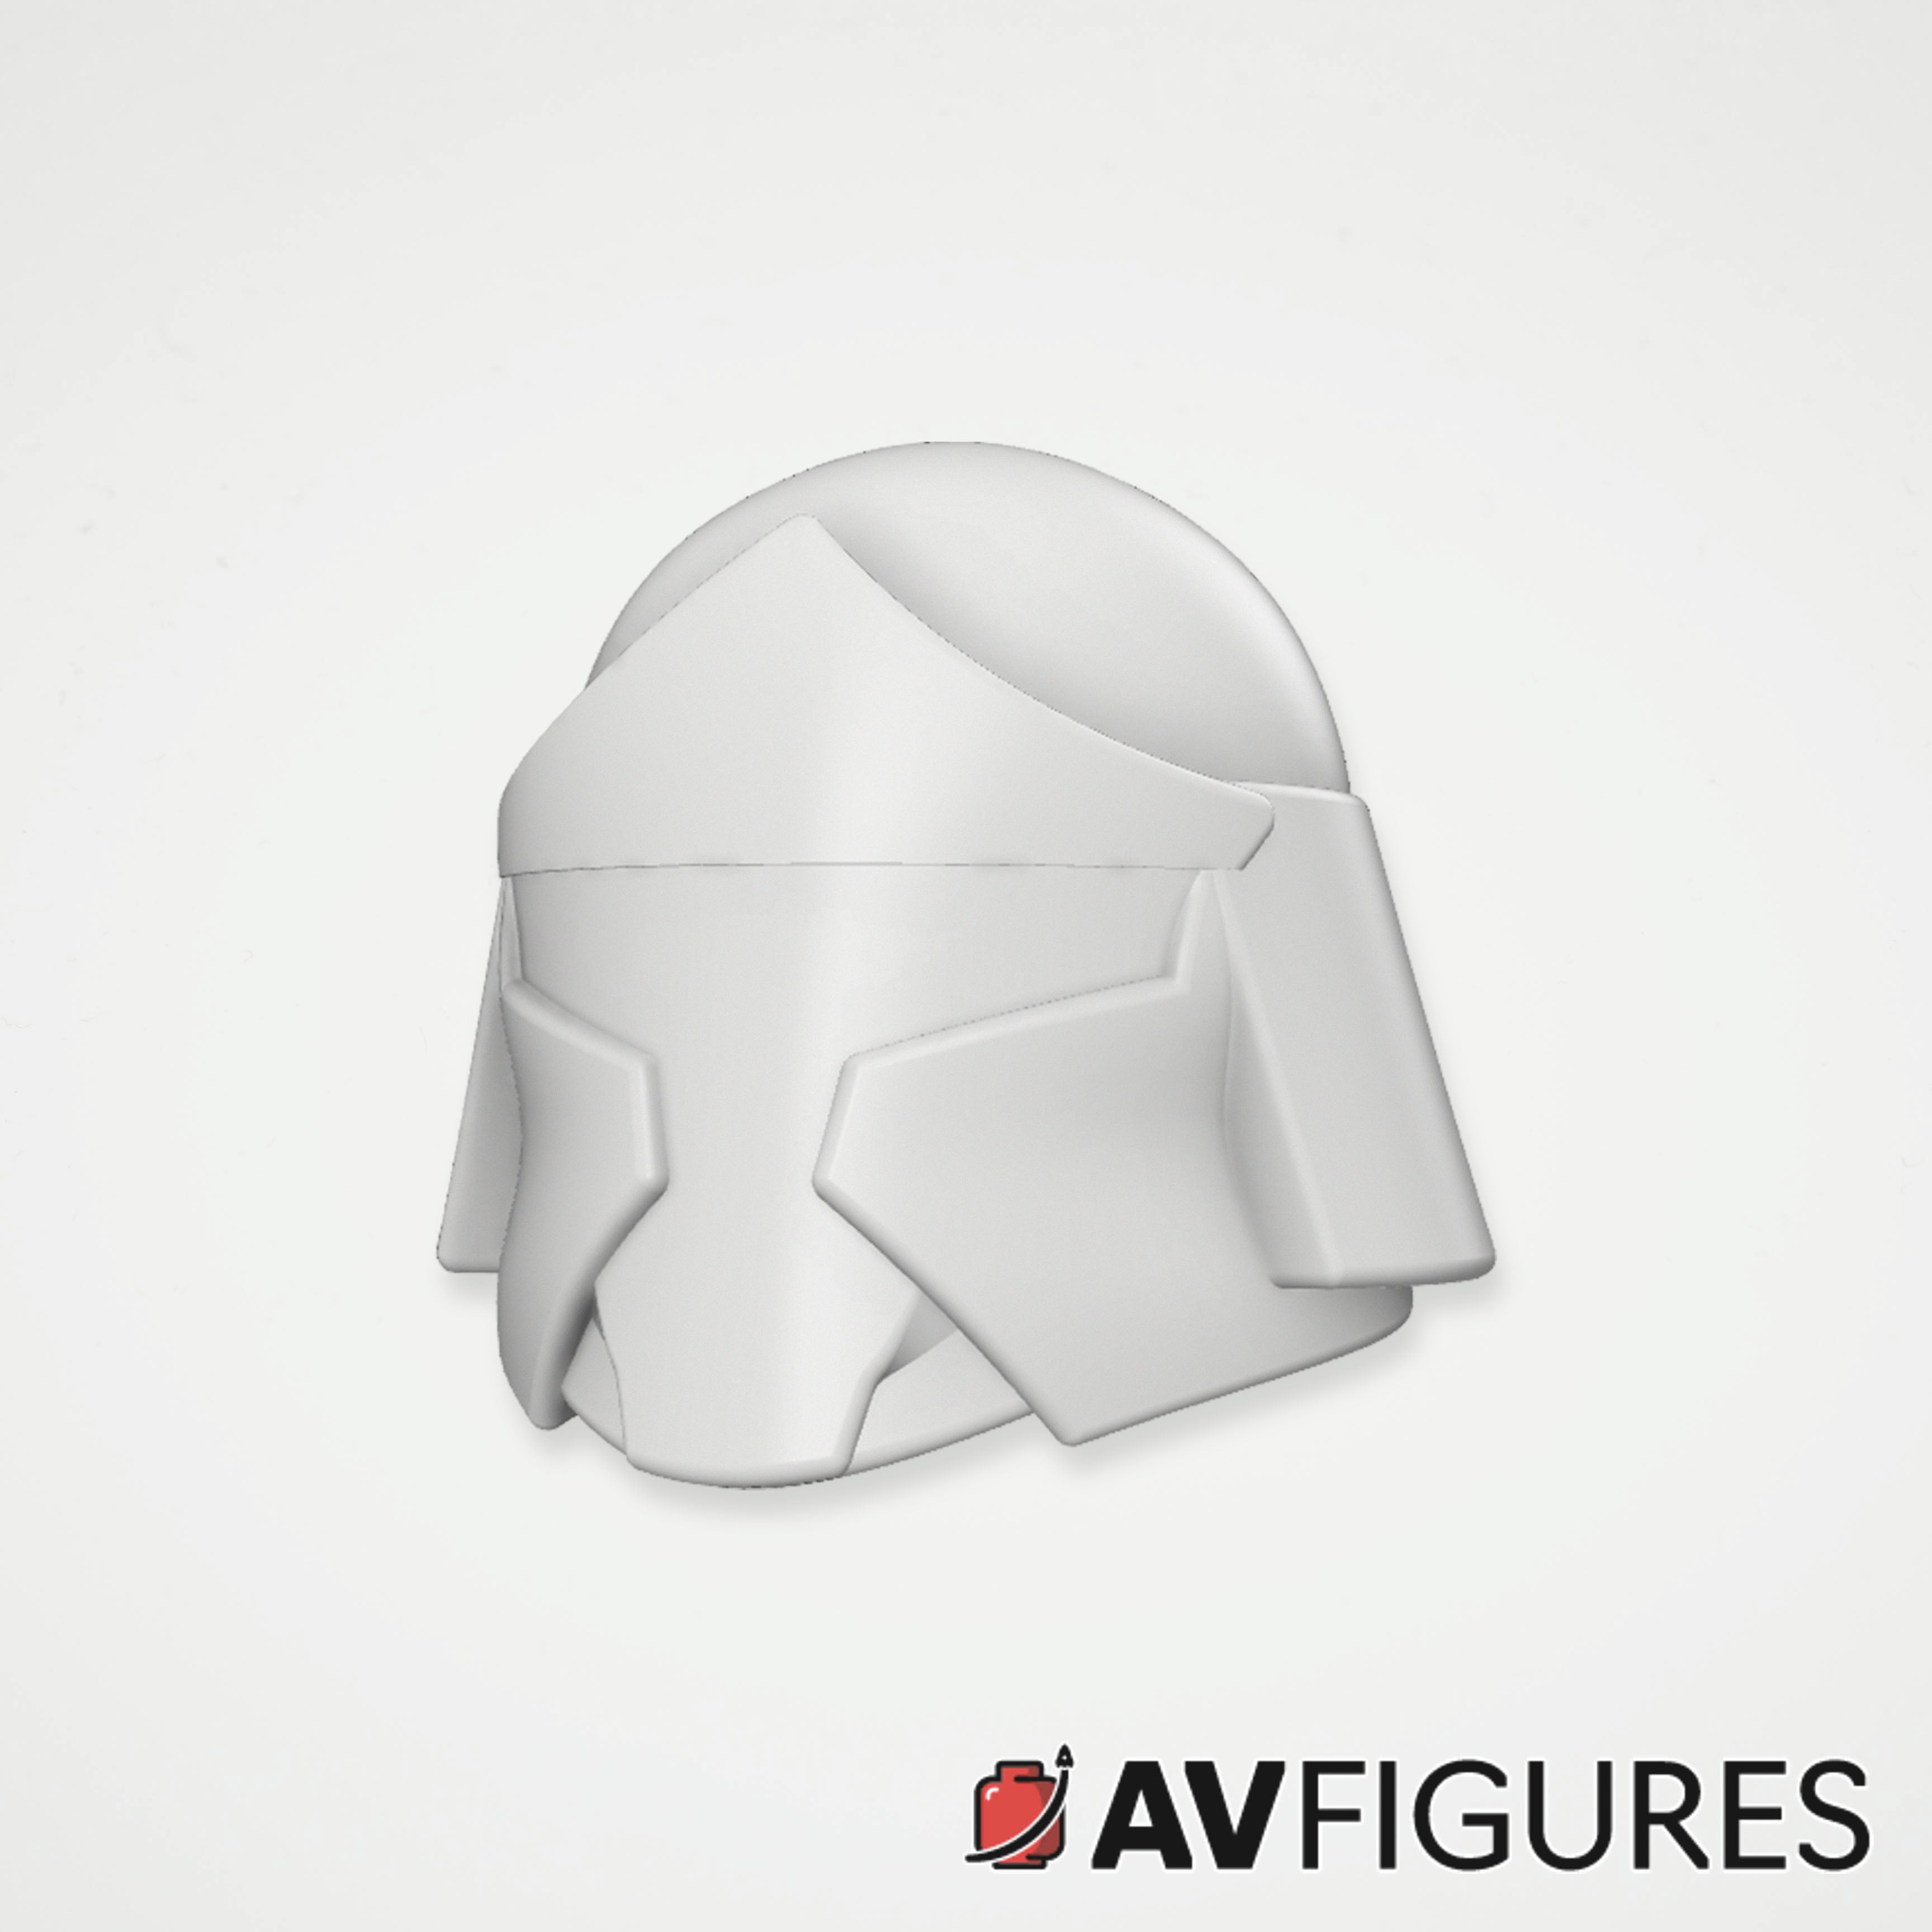 Bartok Bacara 3D Printed Helmet